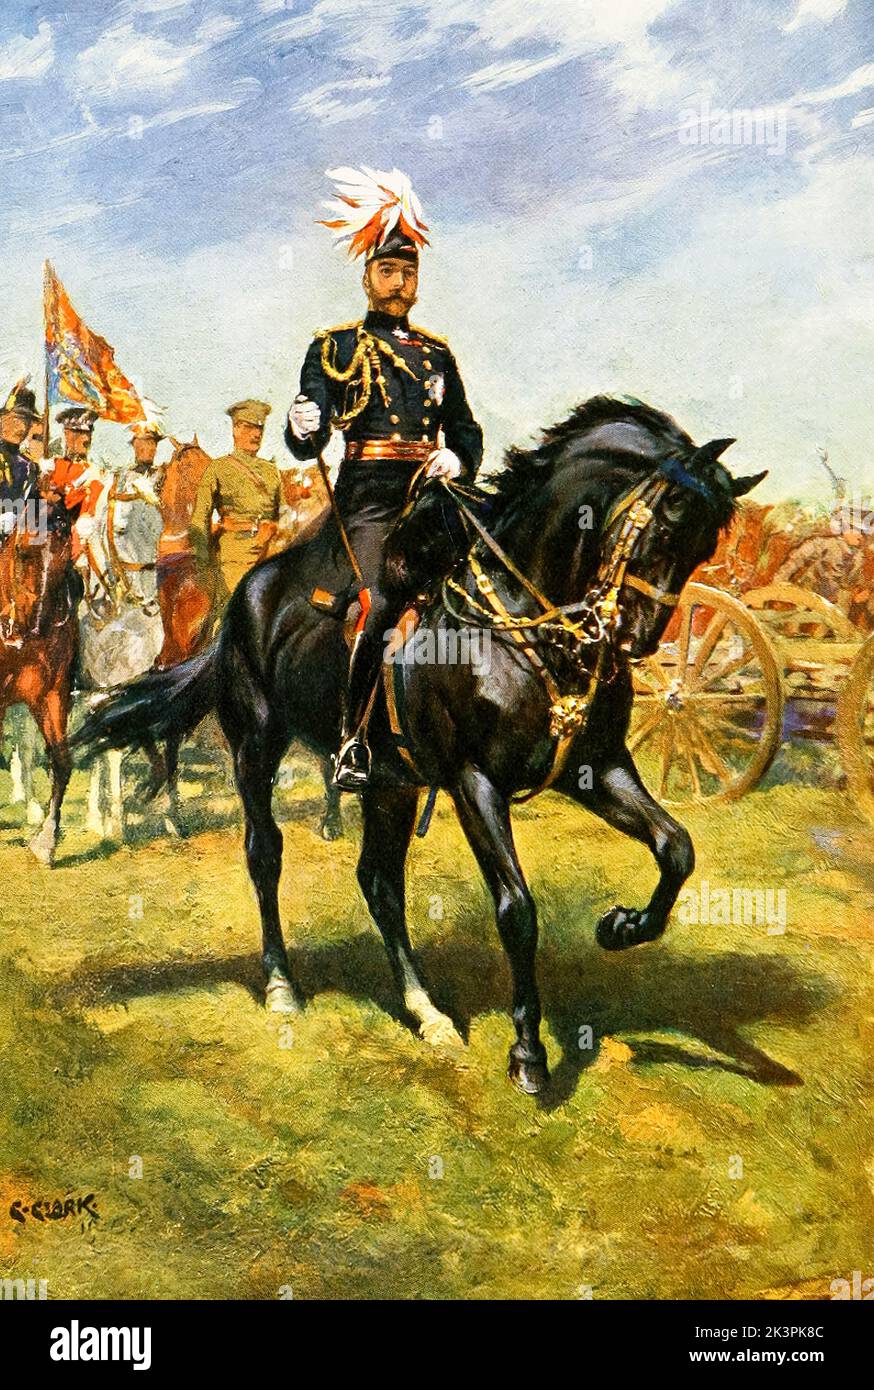 King George V of the United Kingdom (1865-1936), reign (1910-1936), on horseback, equestrian portrait illustration by Christopher Clark, 1911 Stock Photo